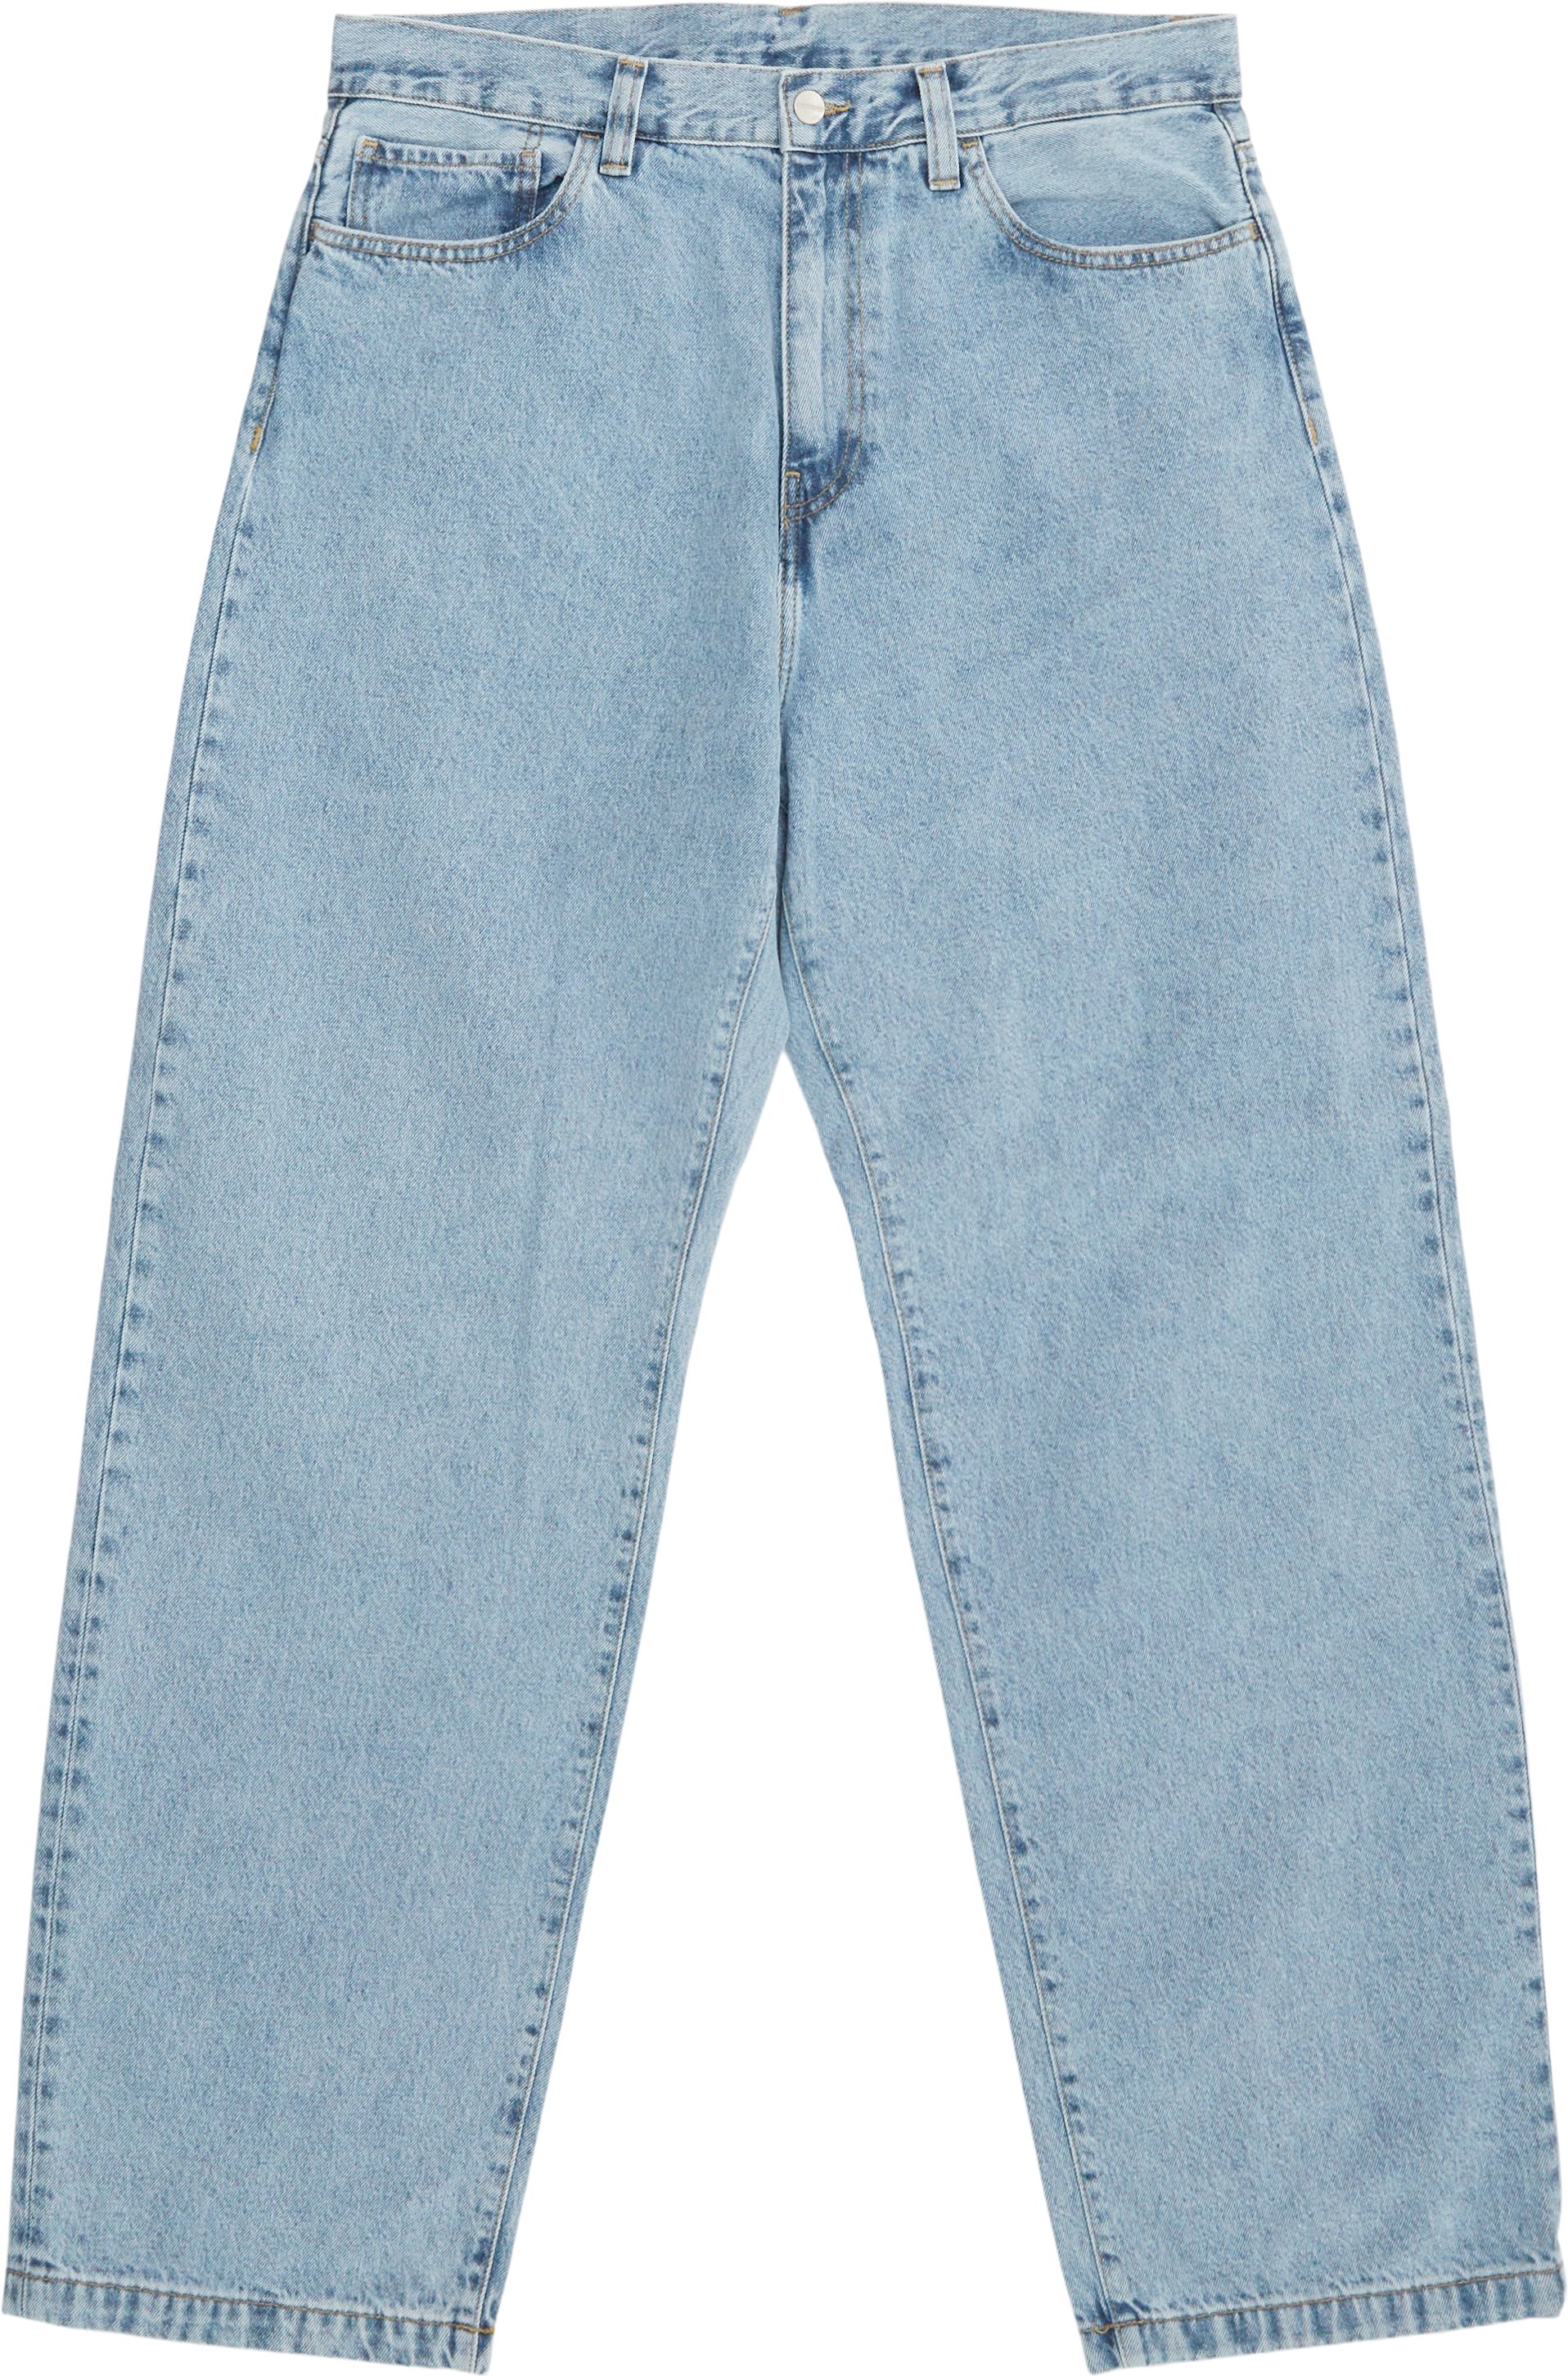 Carhartt WIP Jeans LANDON PANT I030468.0135 Denim